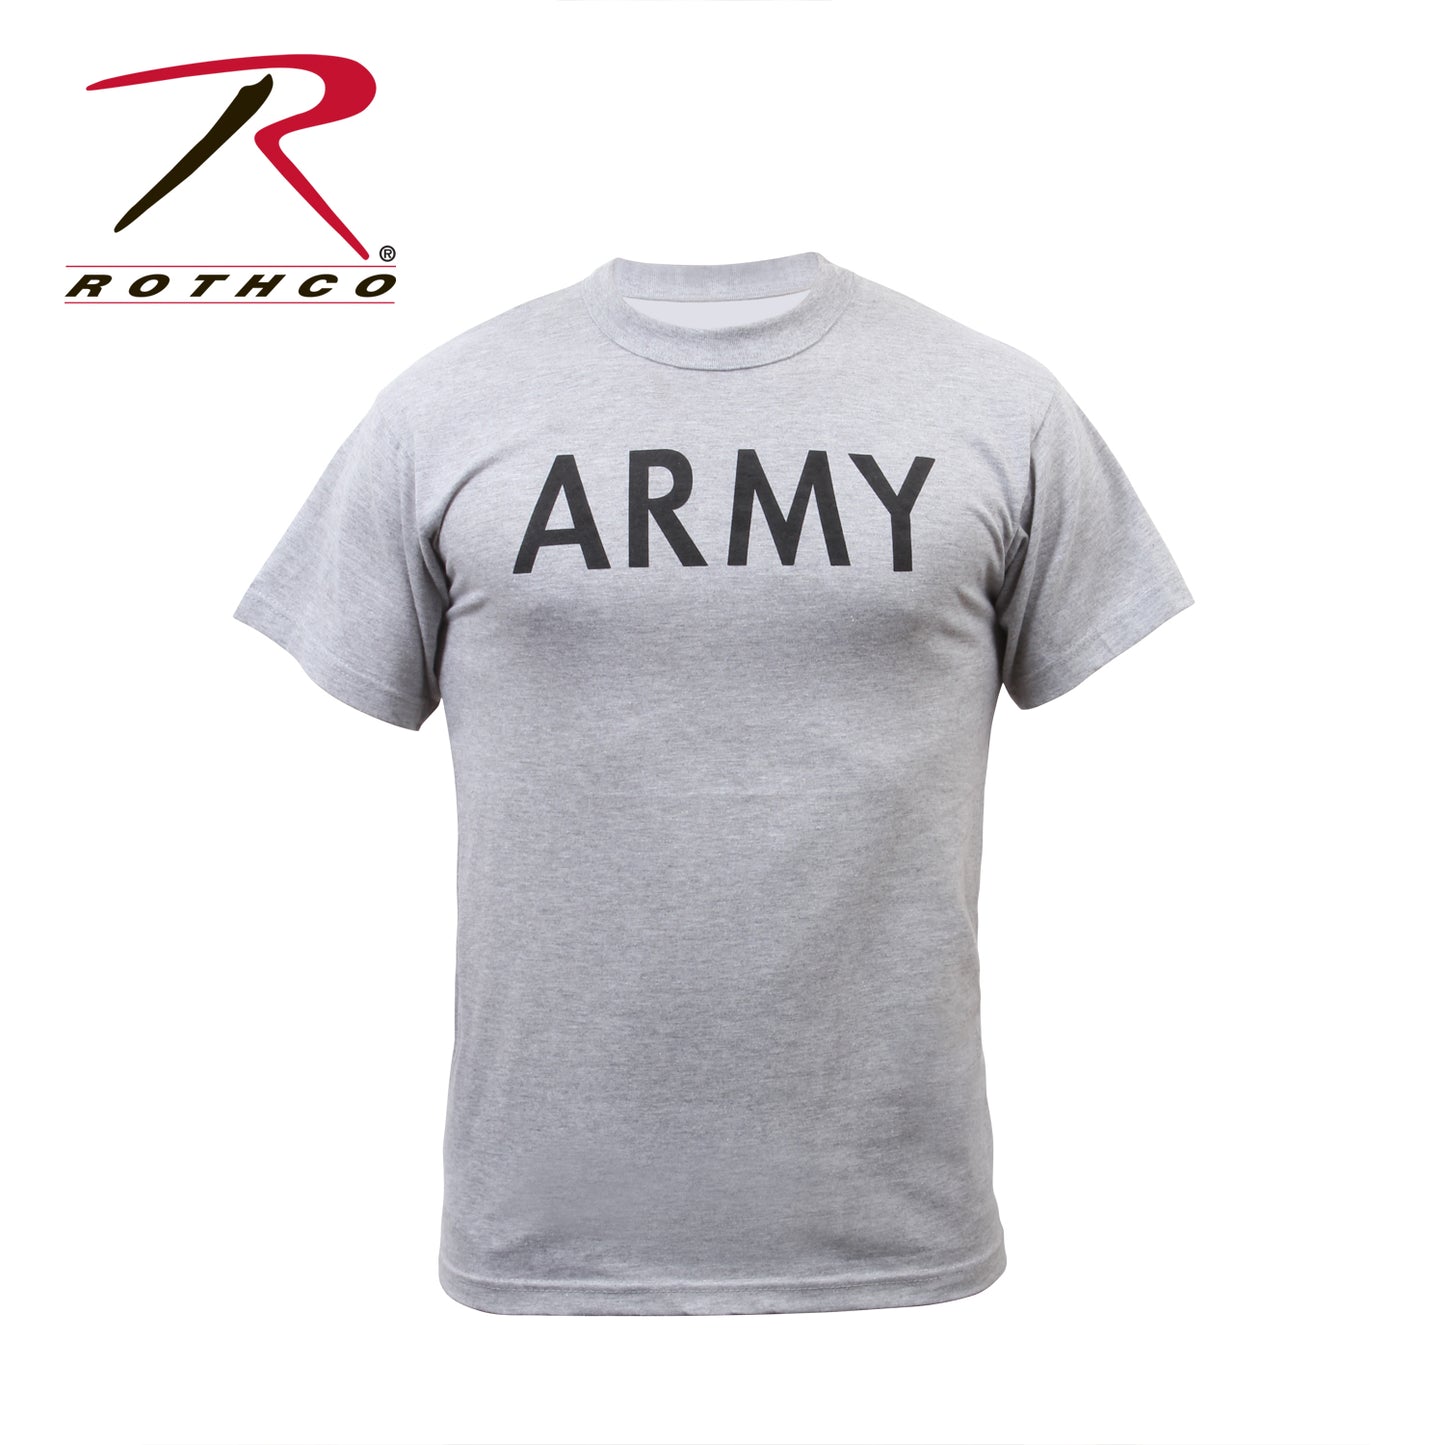 'Army' Physical Training T-Shirt